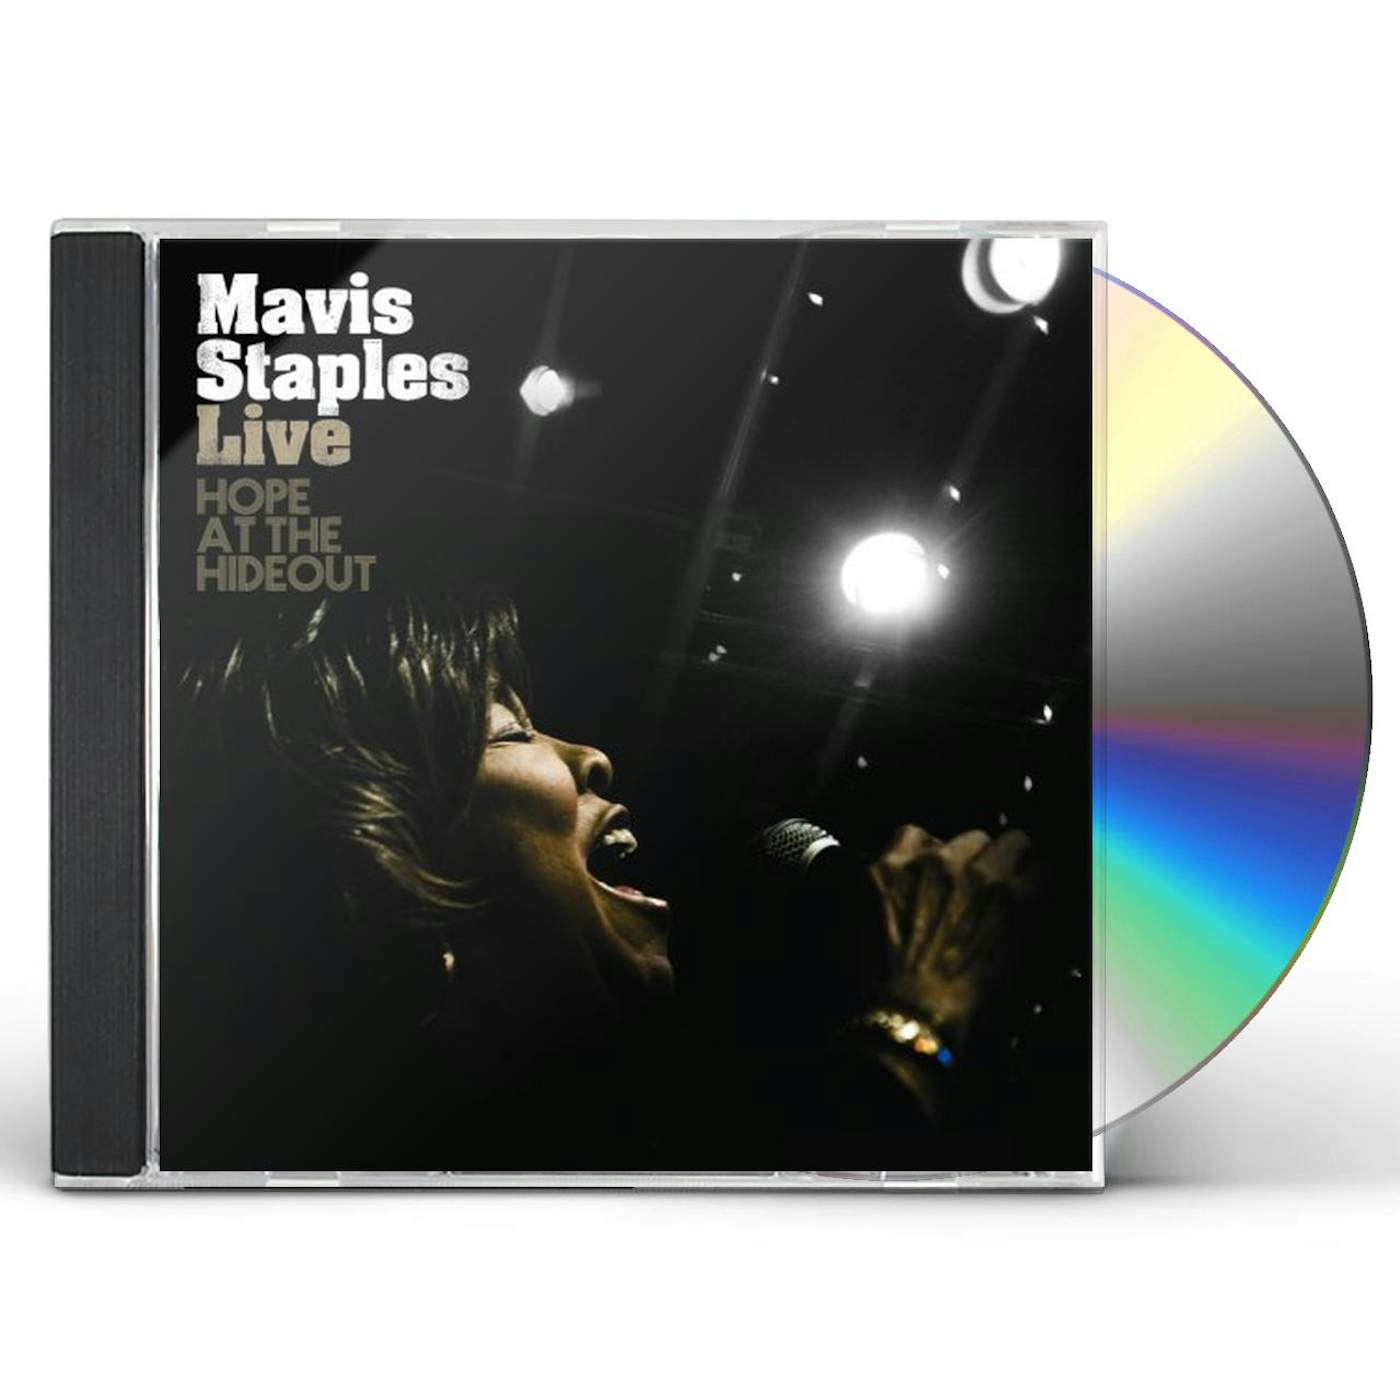 Mavis Staples LIVE: HOPE AT THE HIDEOUT CD